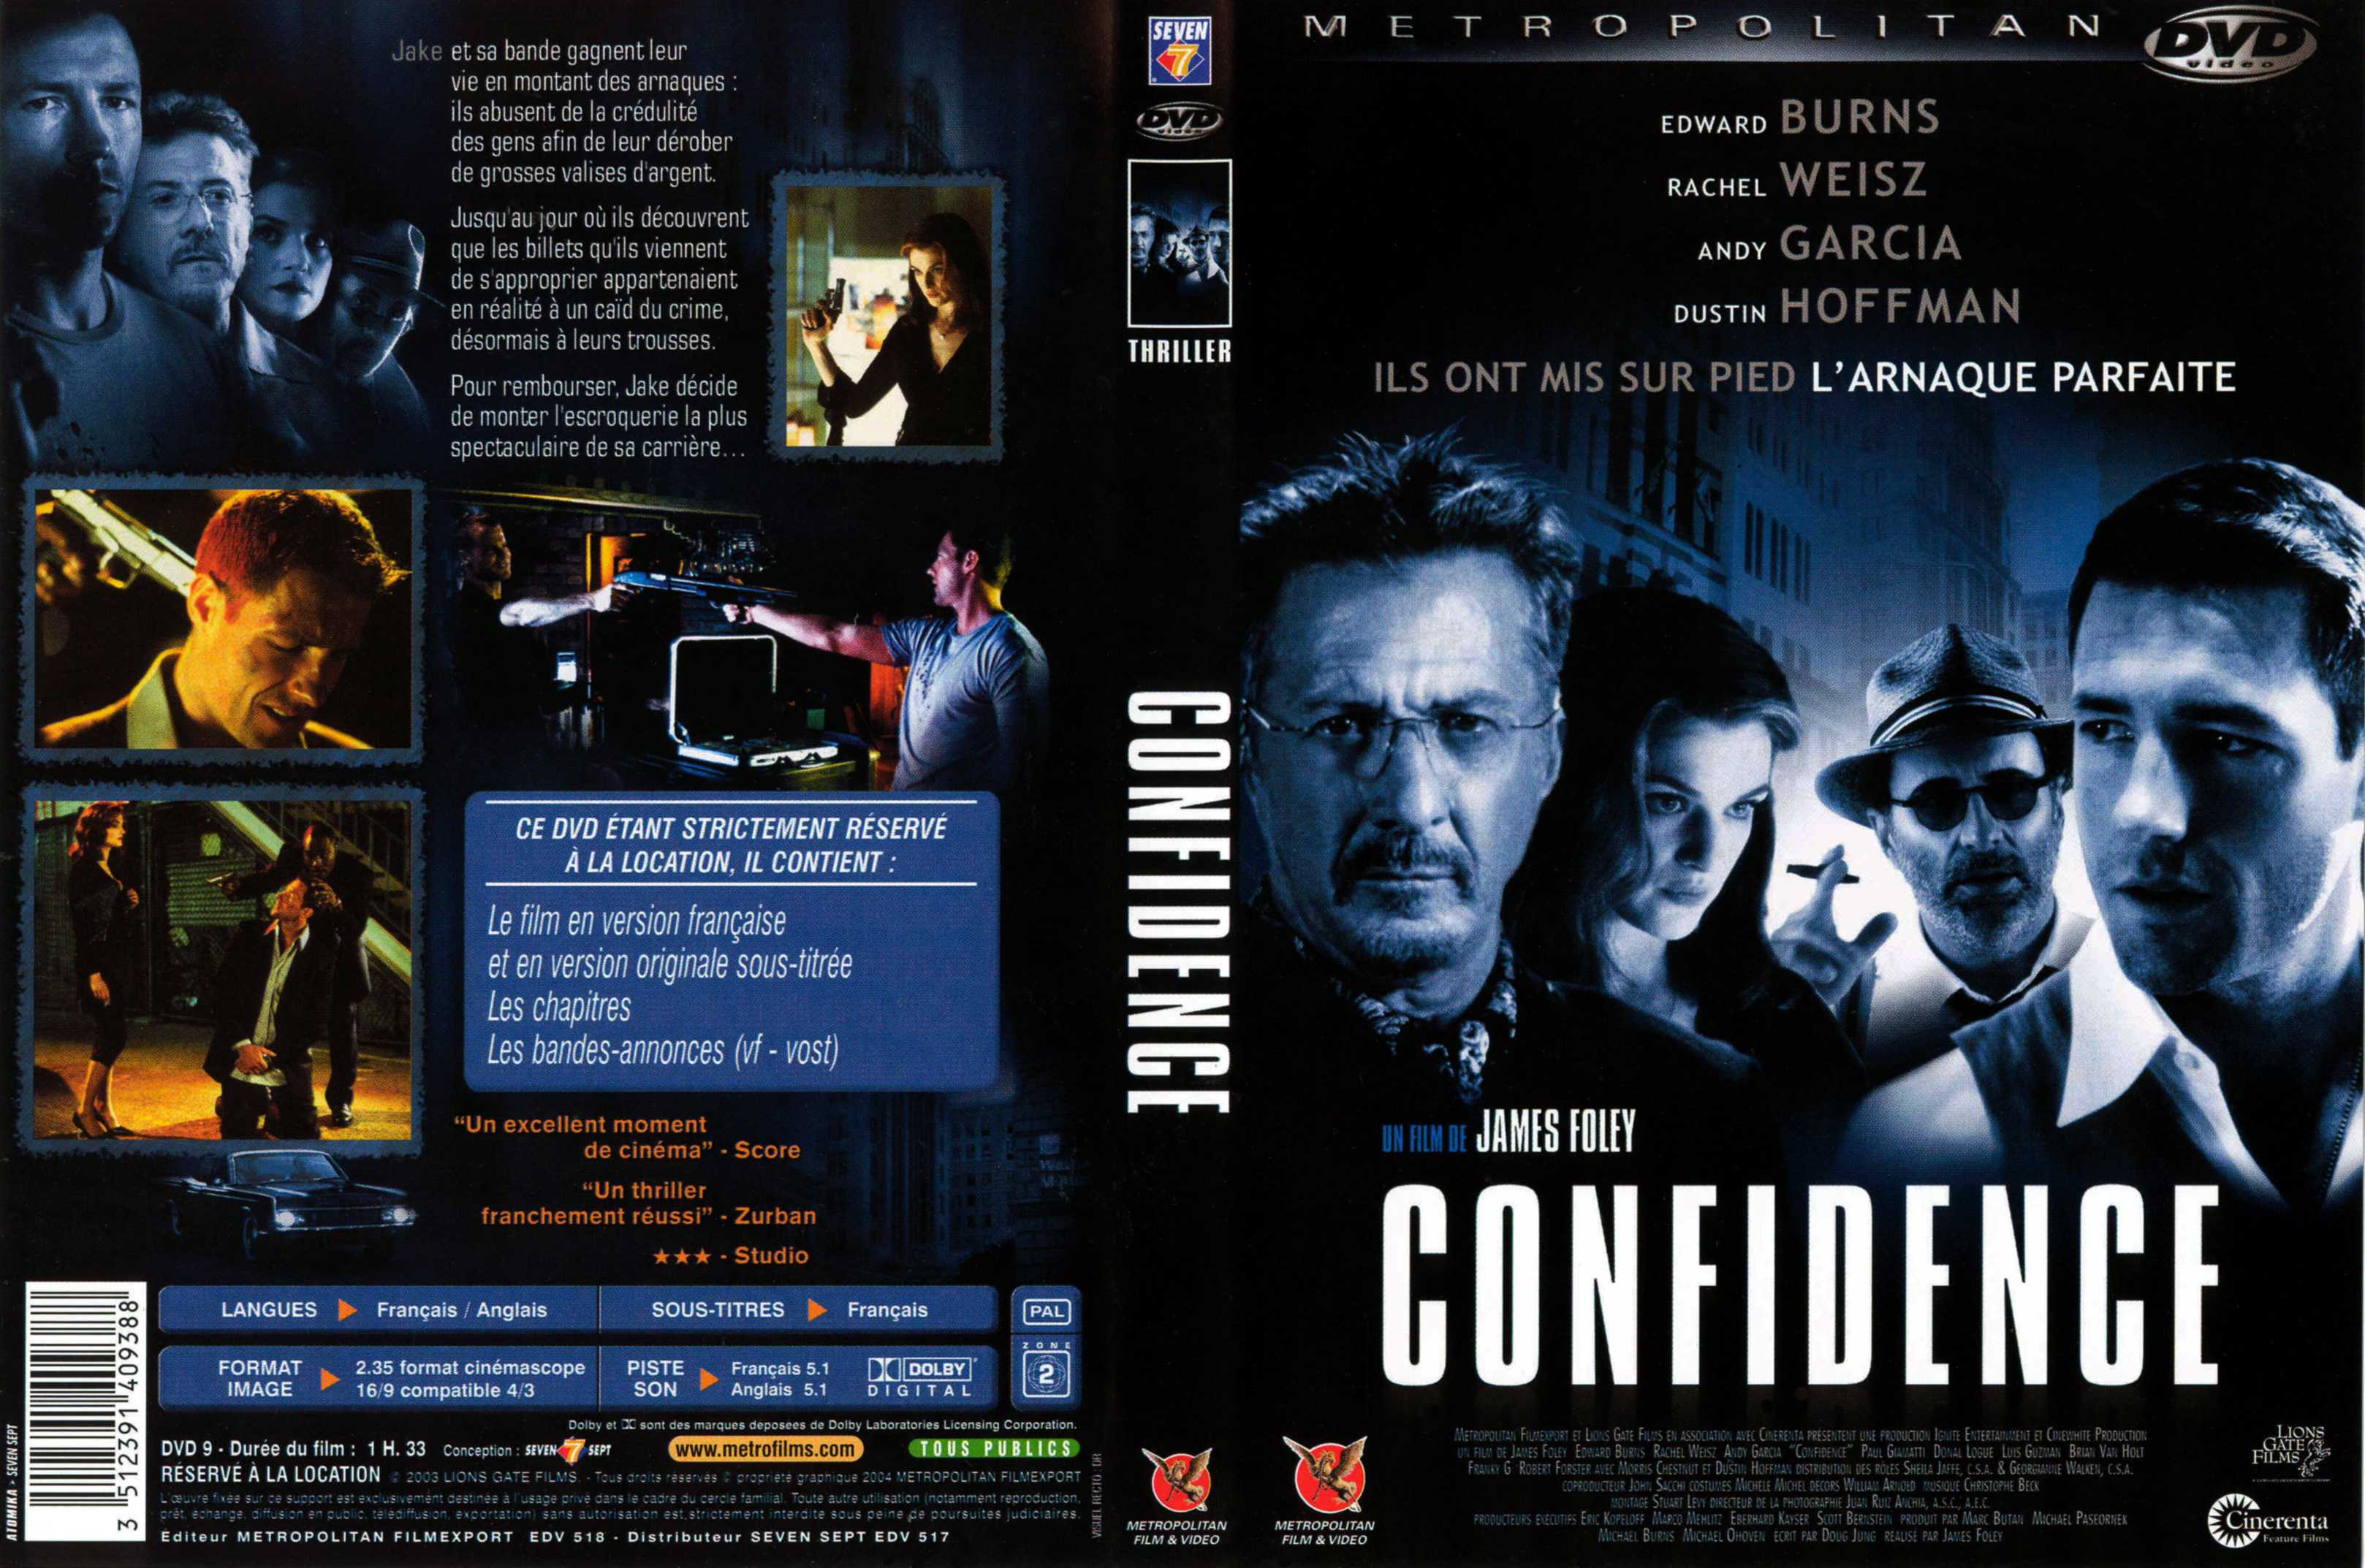 Jaquette DVD Confidence v2